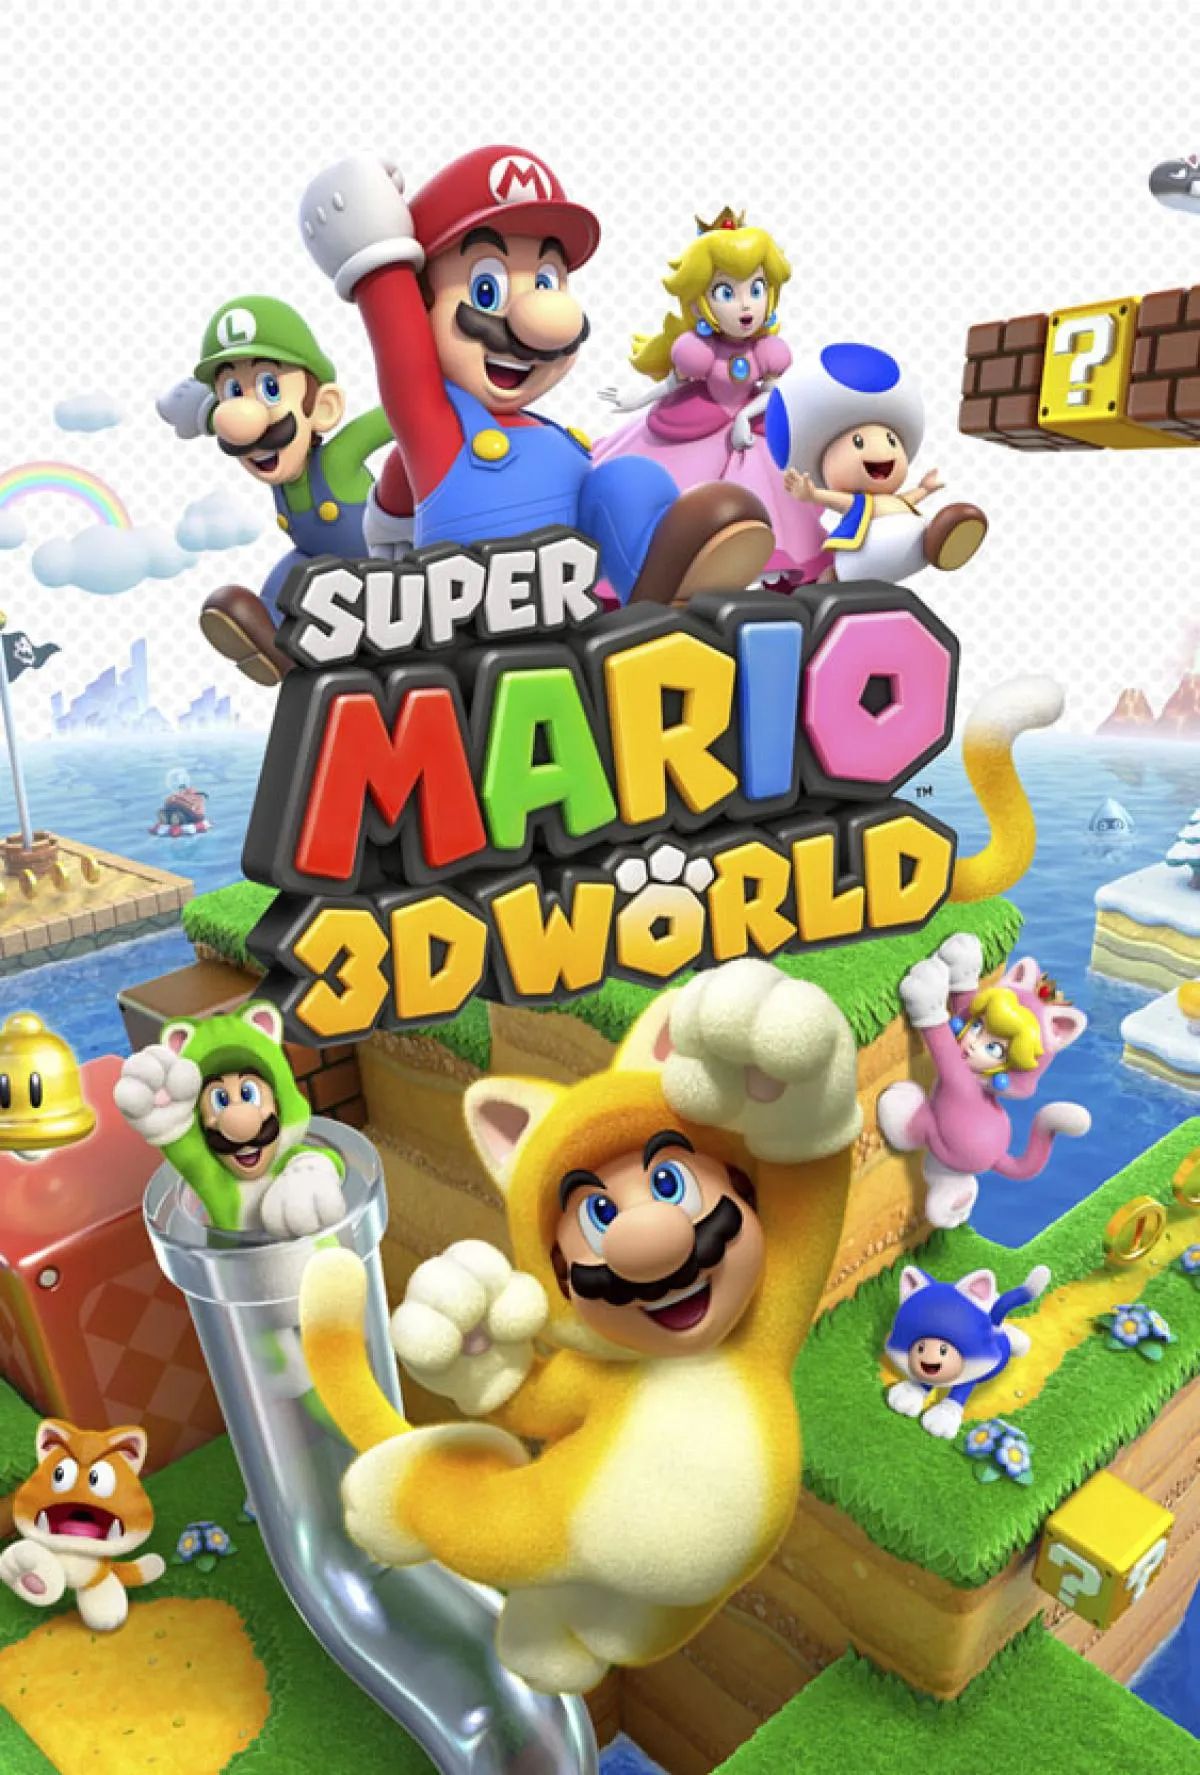 Super Mario 3D world Game Poster